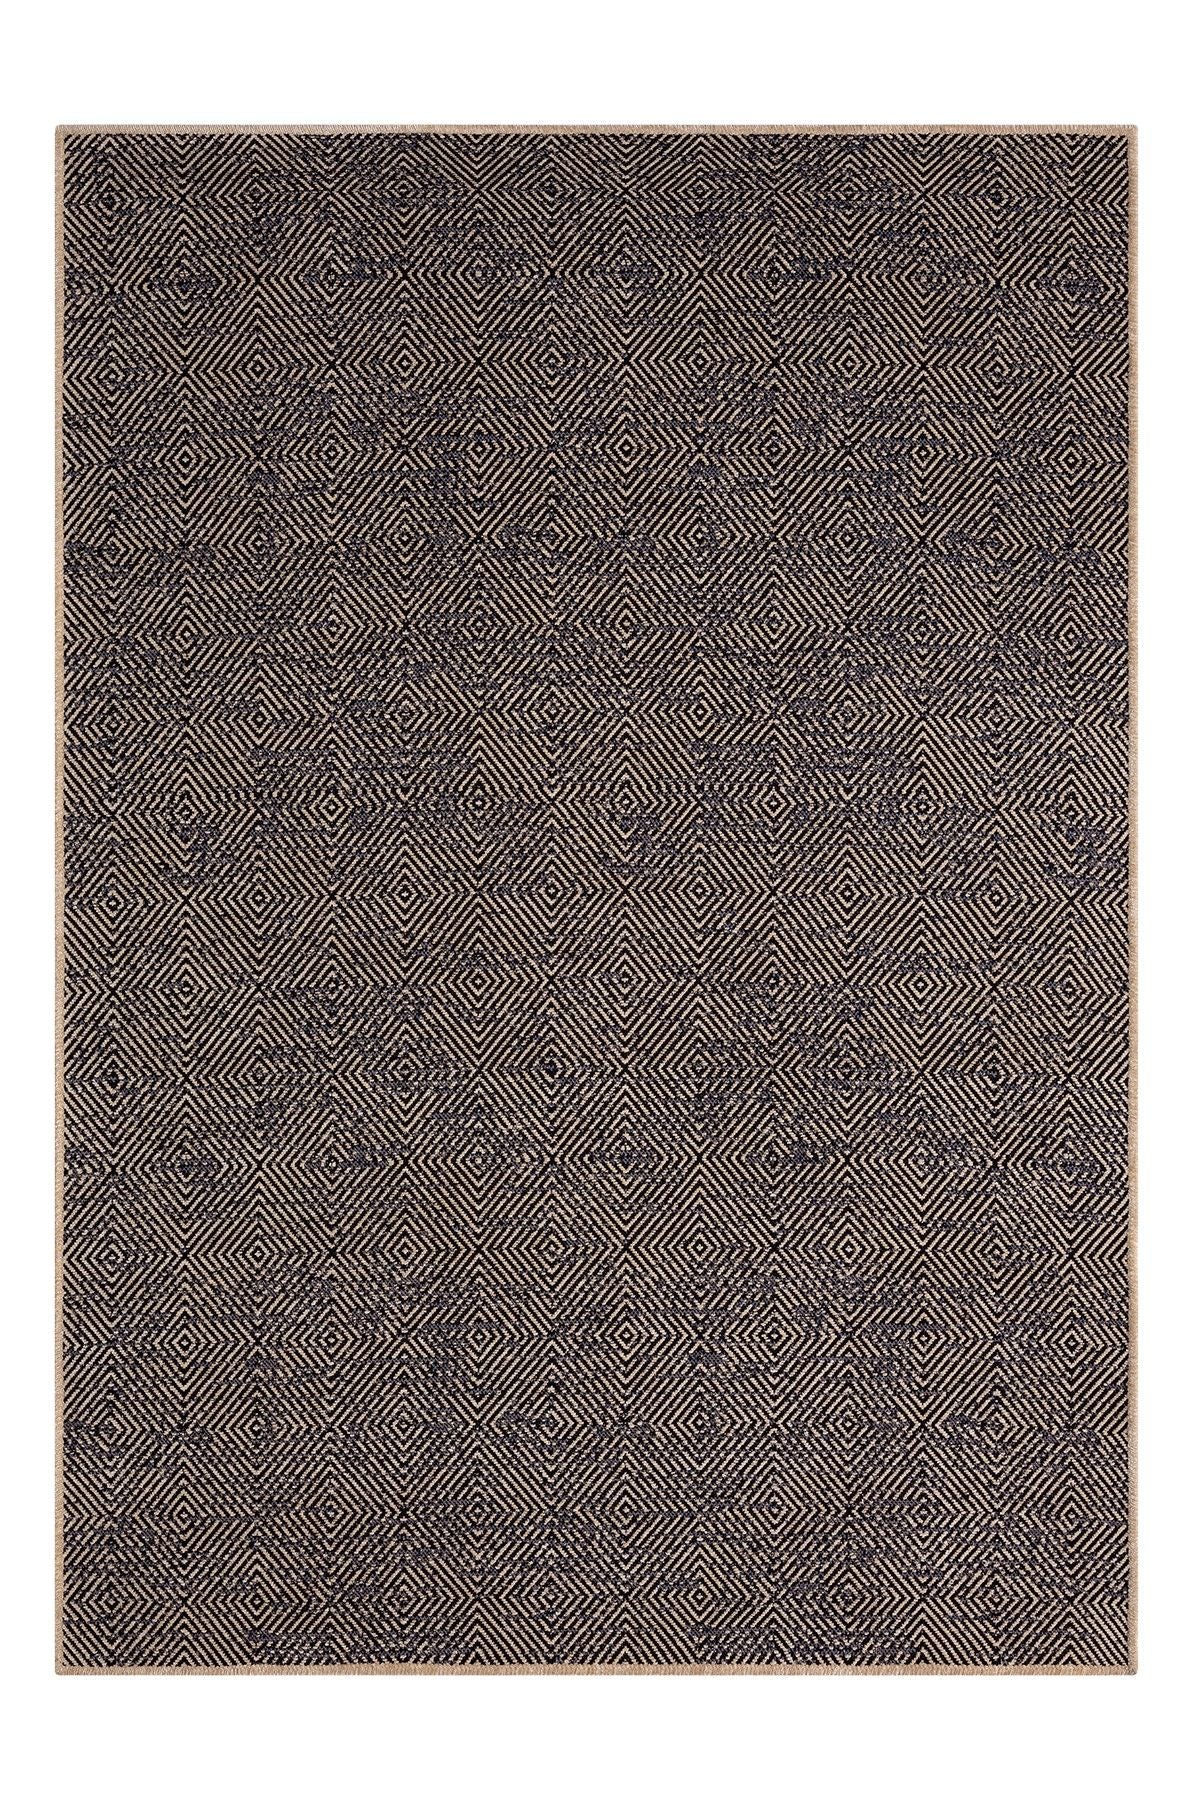 Terapia 3504 - Carpet (200 x 290)